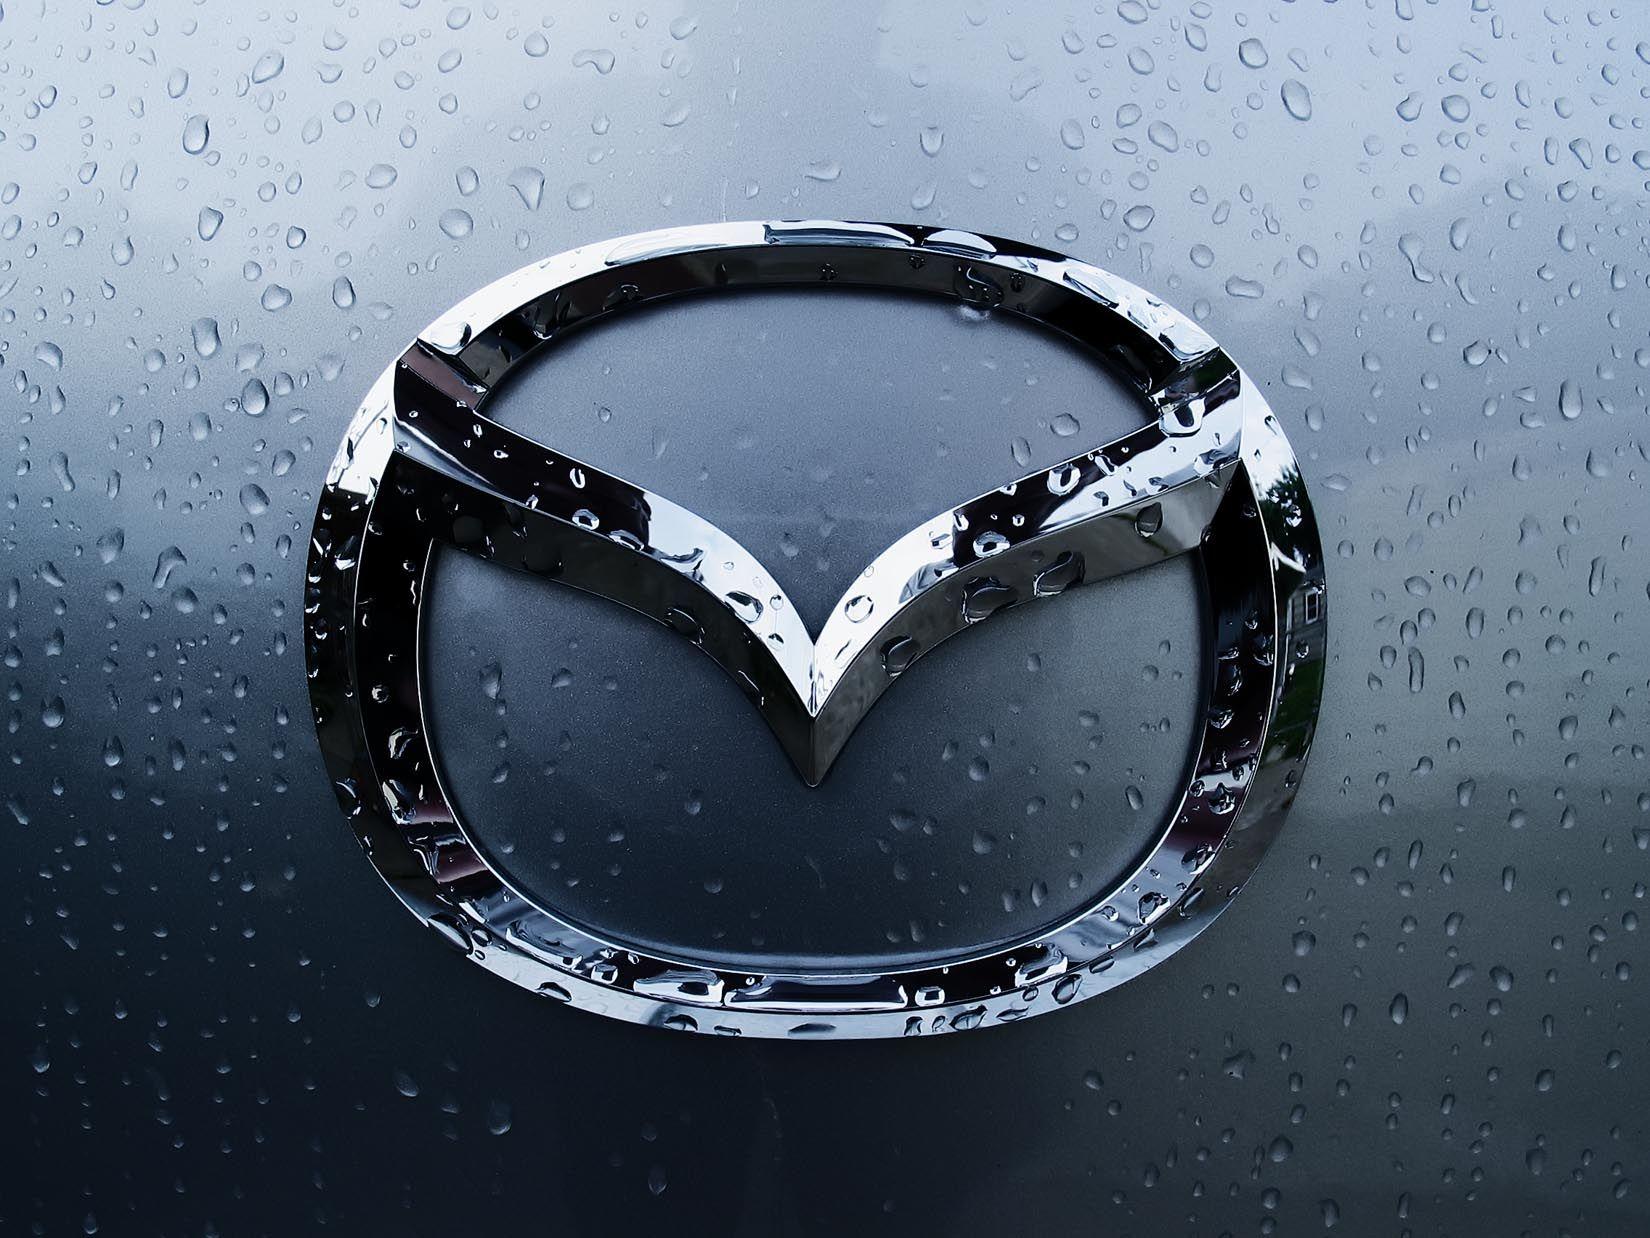 Mazda Logo - Mazda Logo, Mazda Car Symbol Meaning and History | Car Brand Names.com